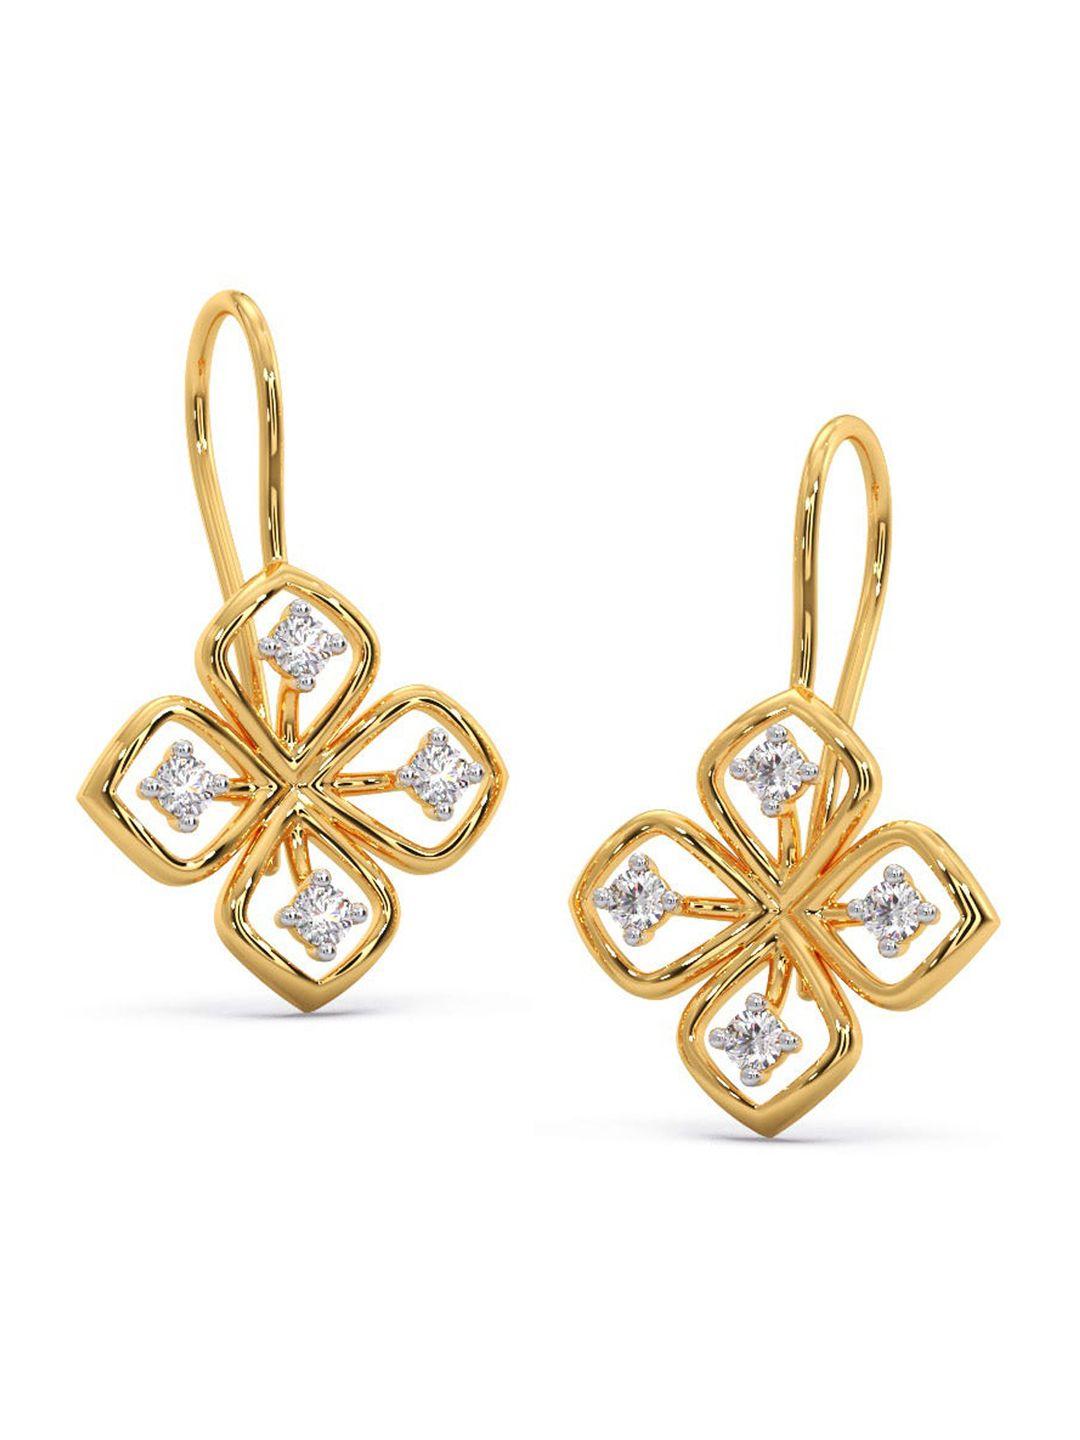 candere a kalyan jewellers company 18kt bis hallmark gold diamond-studded earrings -2.0gm